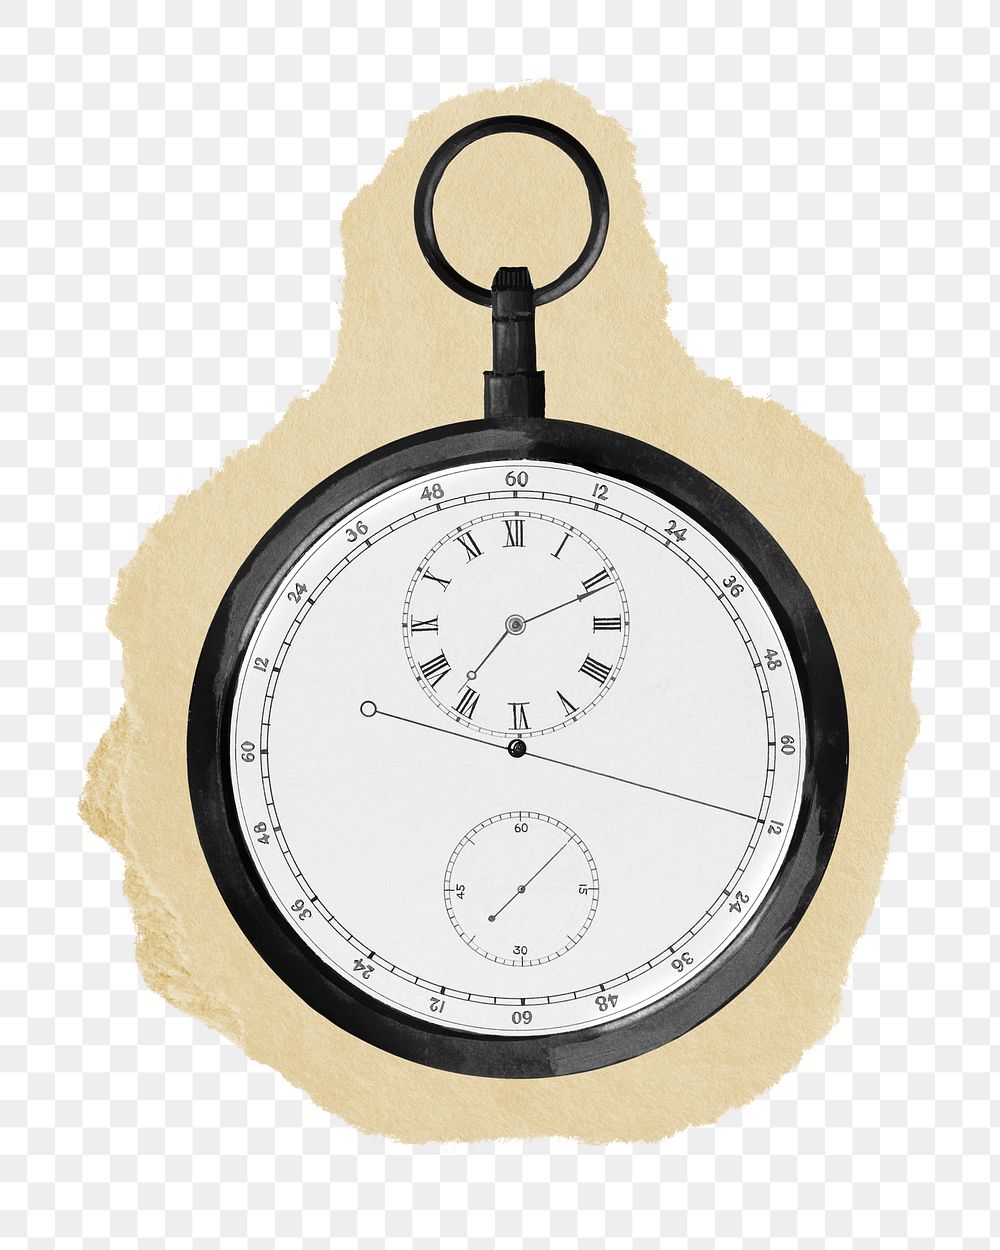 Png split second chronograph watch sticker, vintage illustration, transparent background, ripped paper badge